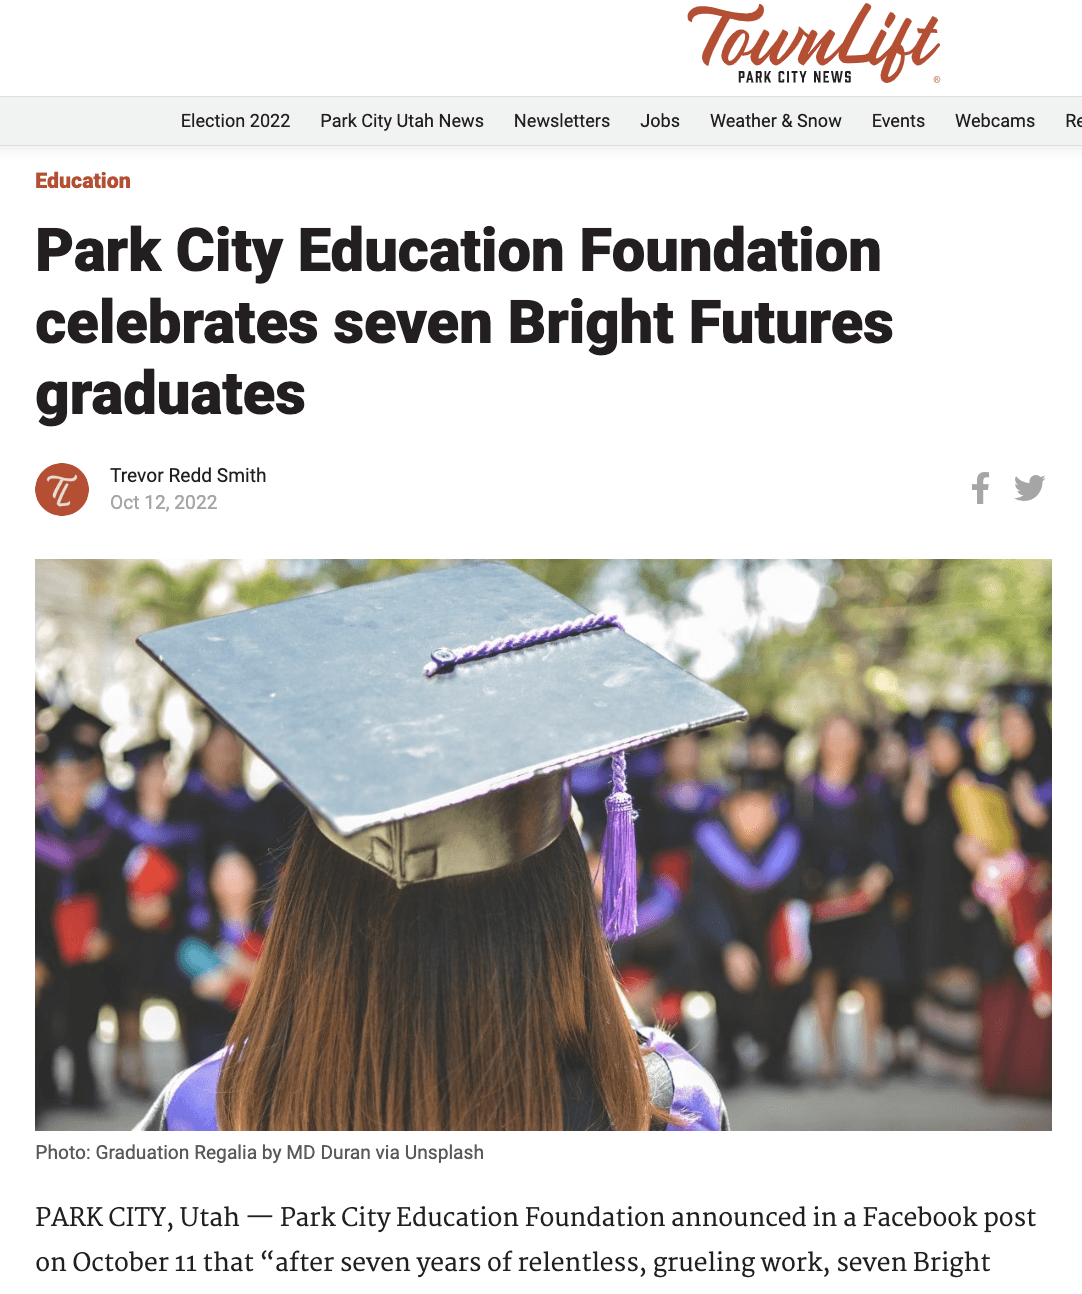 Park City Education Foundation Celebrates Seven Bright Futures Graduates